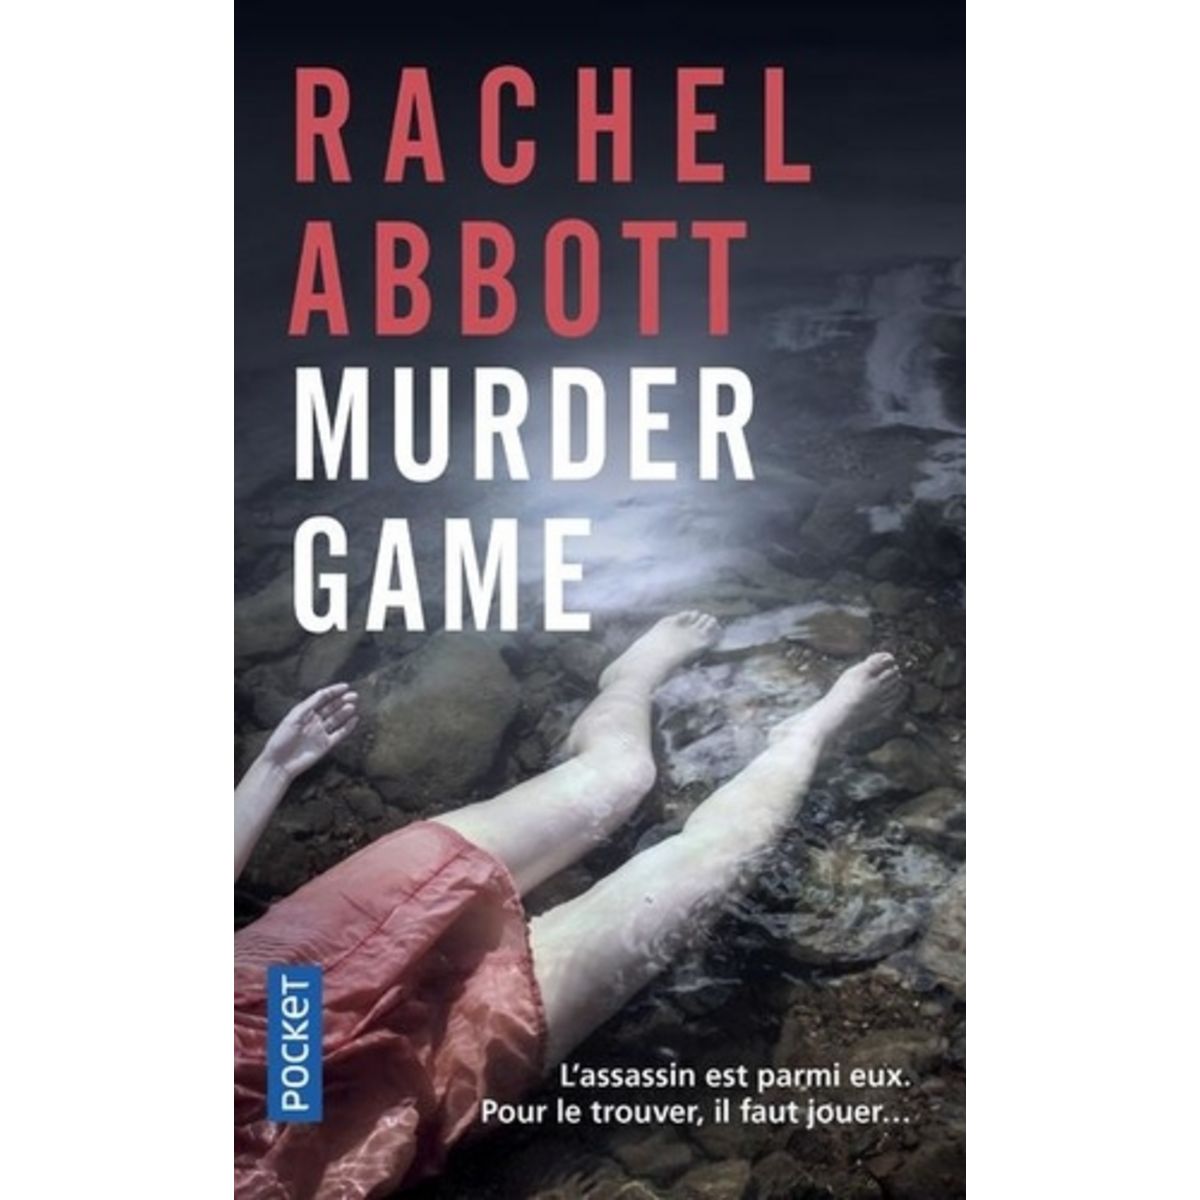  MURDER GAME, Abbott Rachel